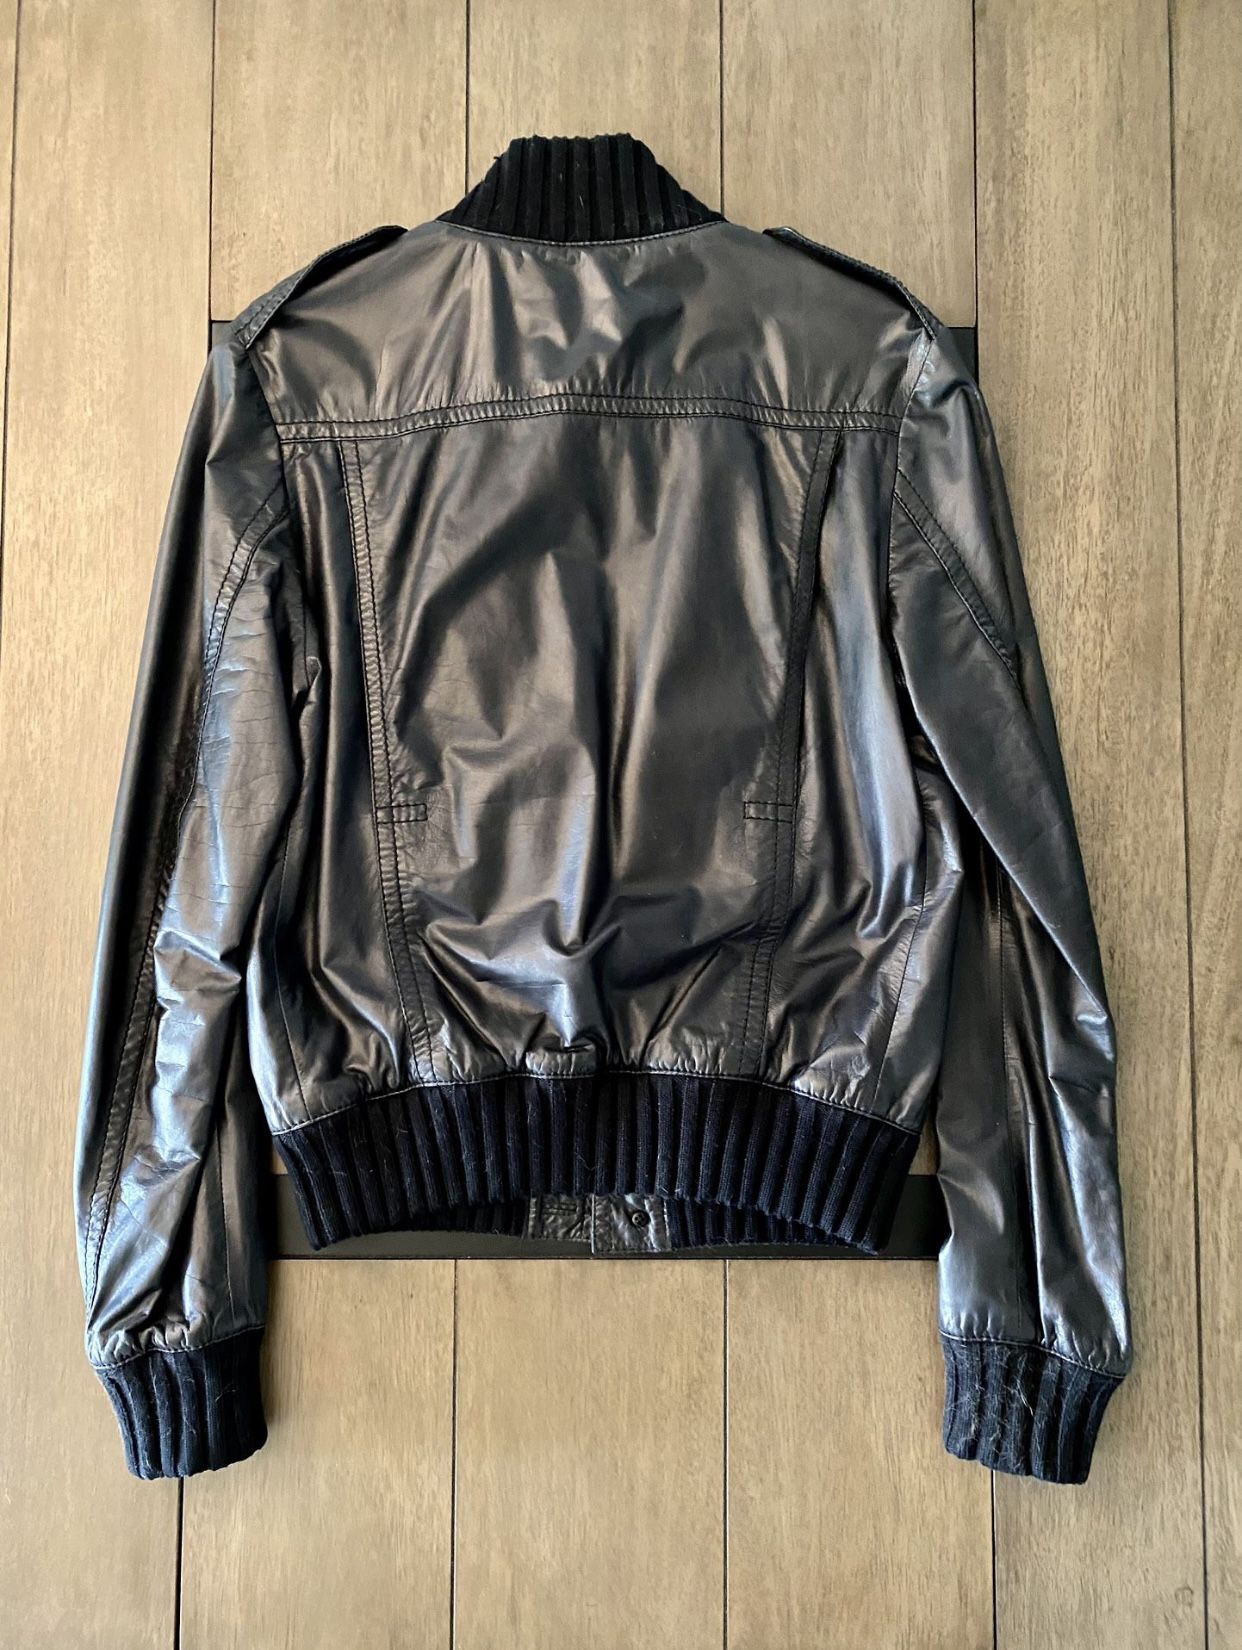 Authentic GUCCI Varsity jacket #241-003-066-3324